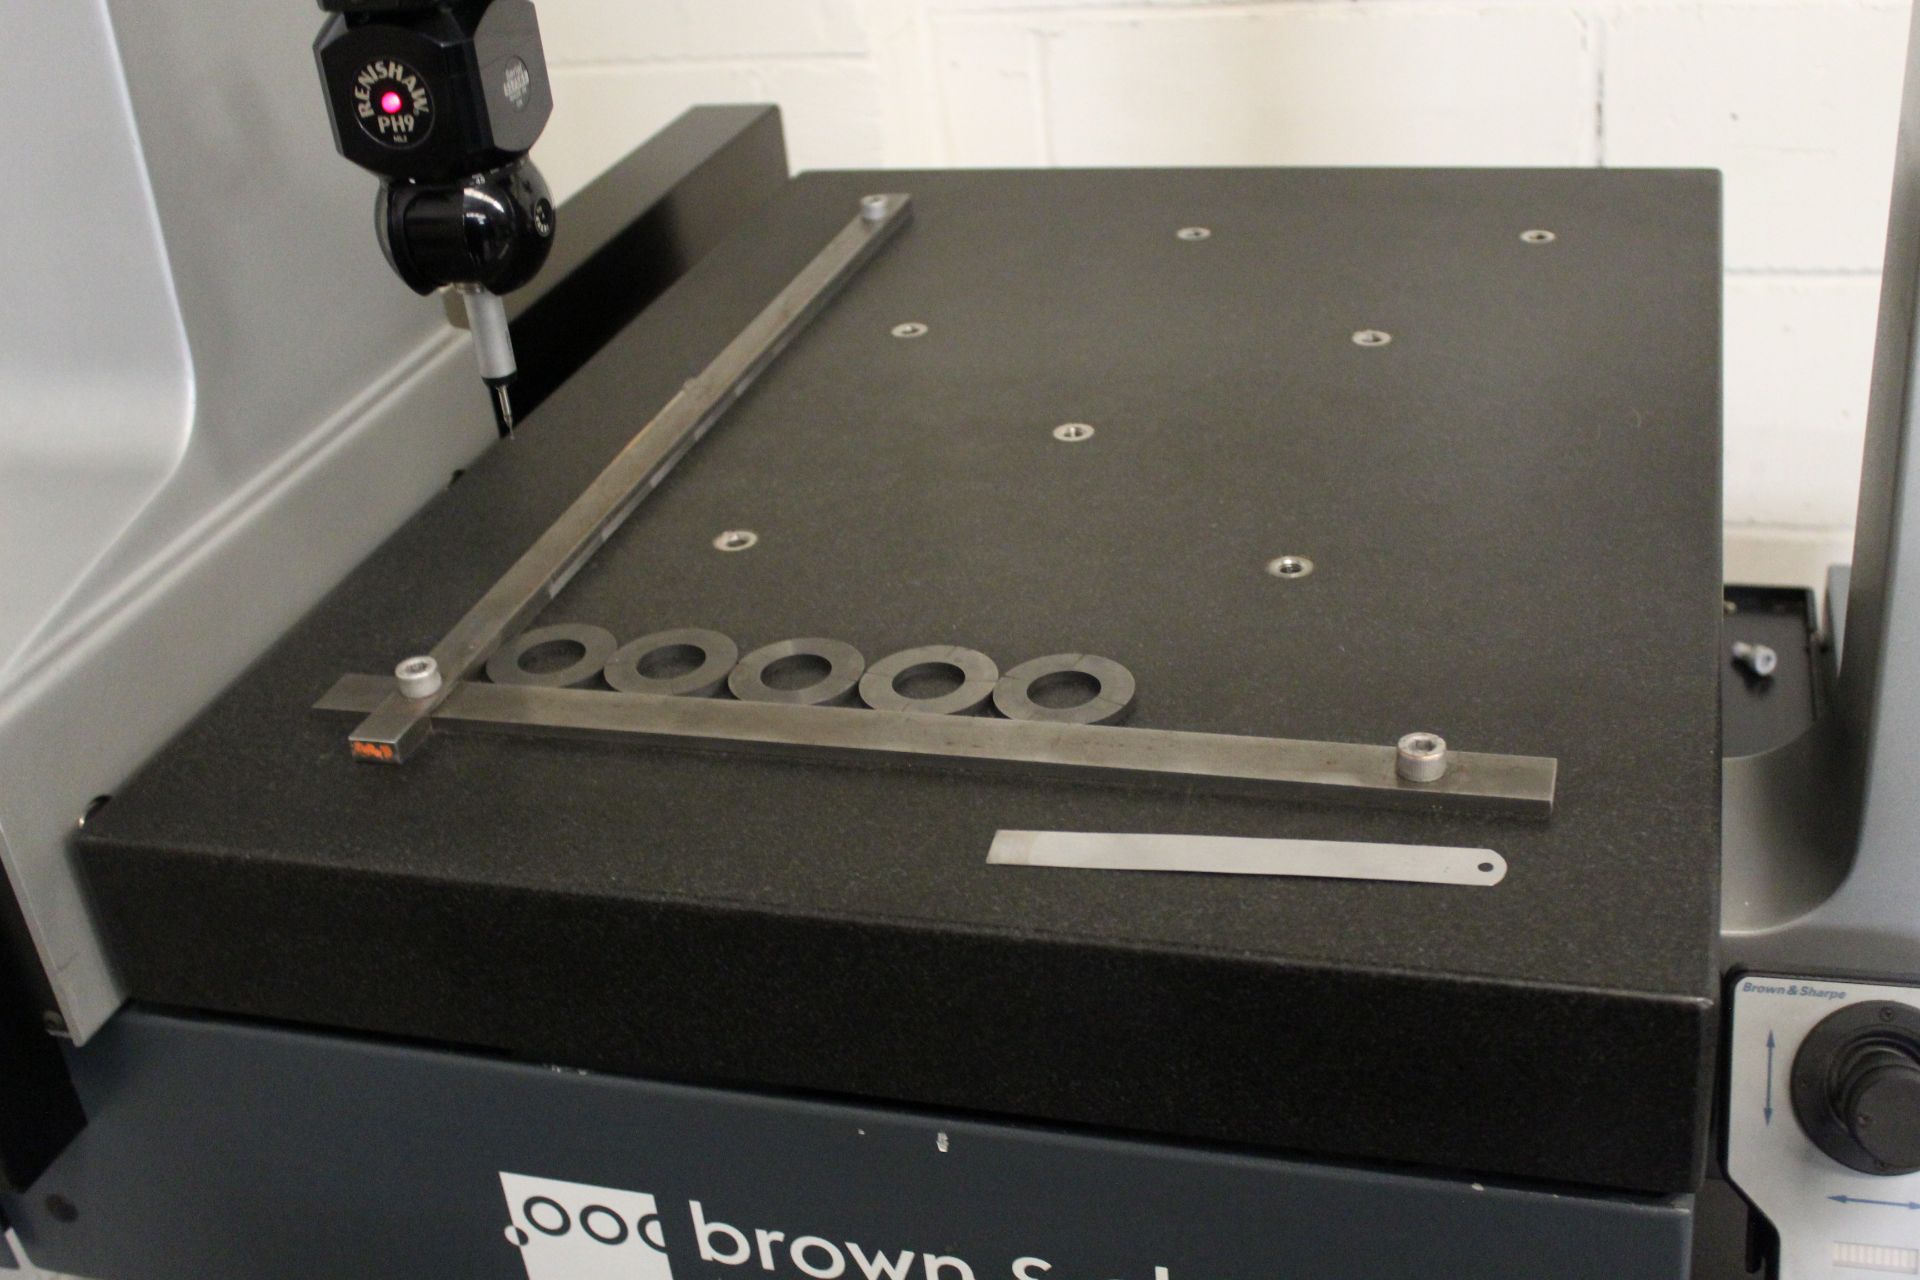 Brown & Sharpe Gage 2000 DCC Frame co-ordinate measuring machine, Serial No. 0403 - 8823 (2003), - Image 7 of 12